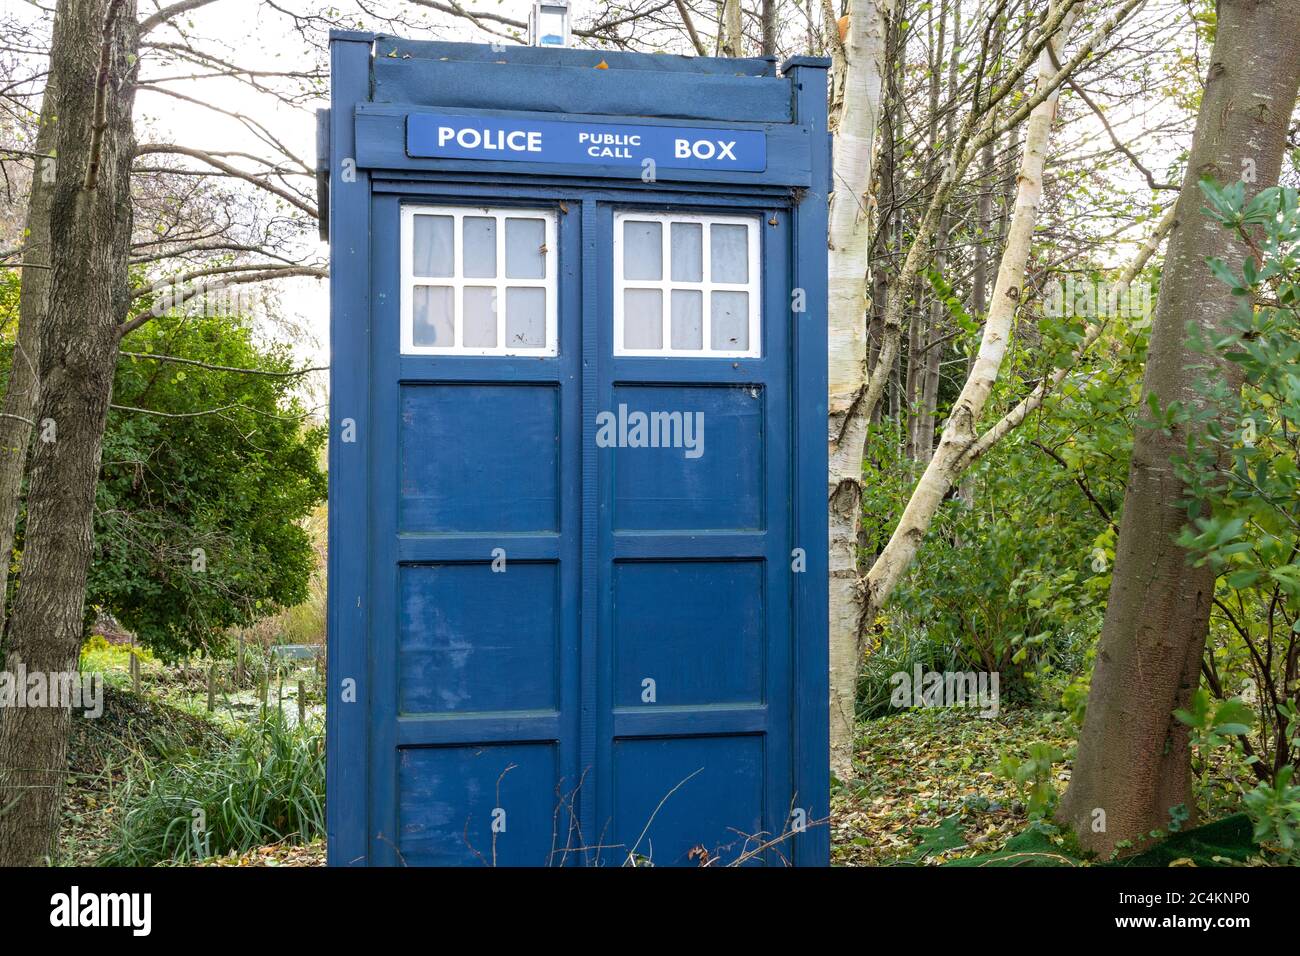 Doctor Who's tardis police box Stock Photo - Alamy